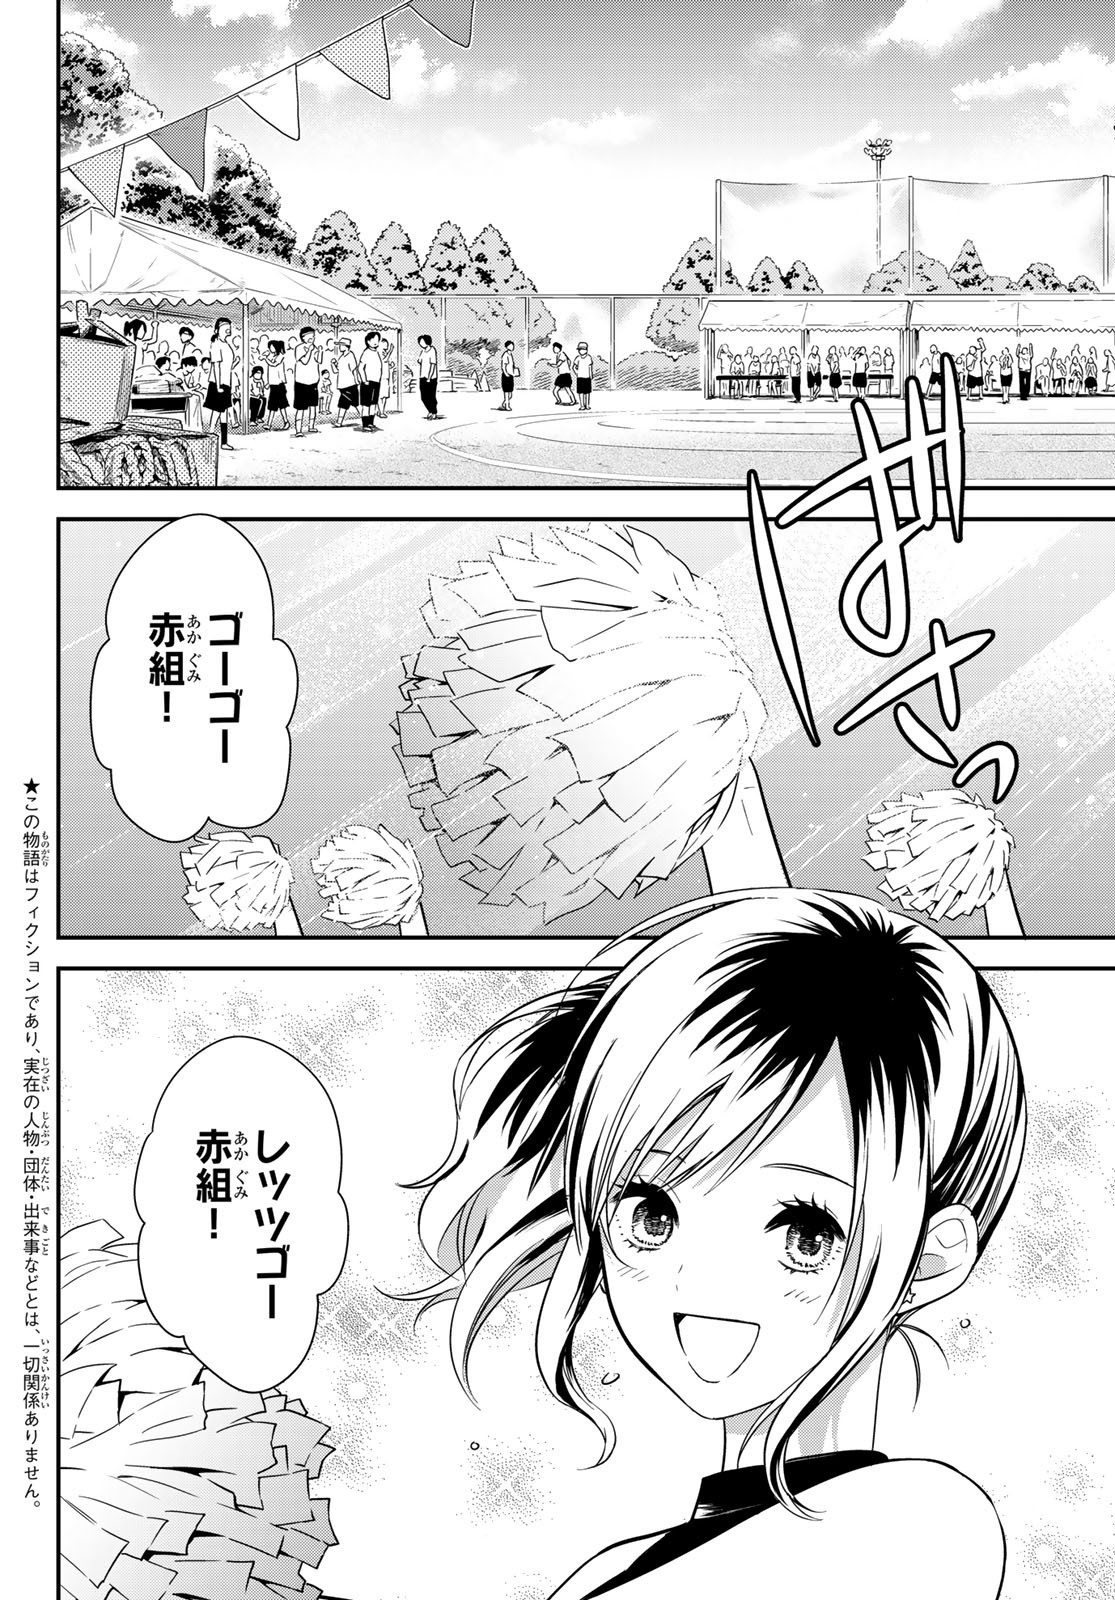 Kimi ga Megami Nara Ii no ni (I Wish You Were My Muse) - Chapter 017 - Page 2